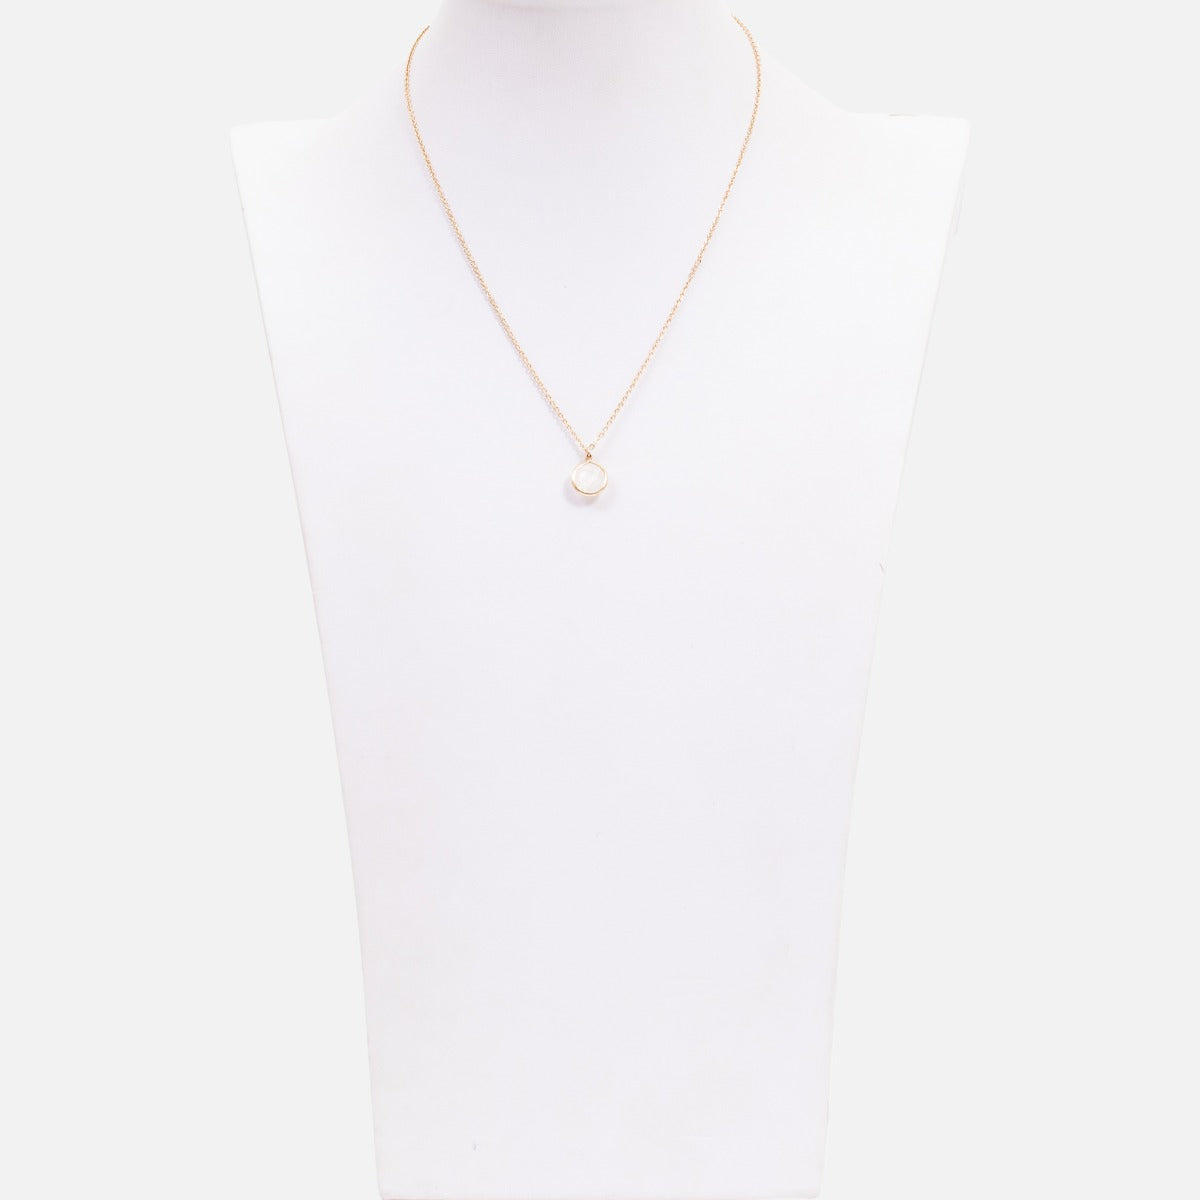 Golden pendant with " quartz stone "